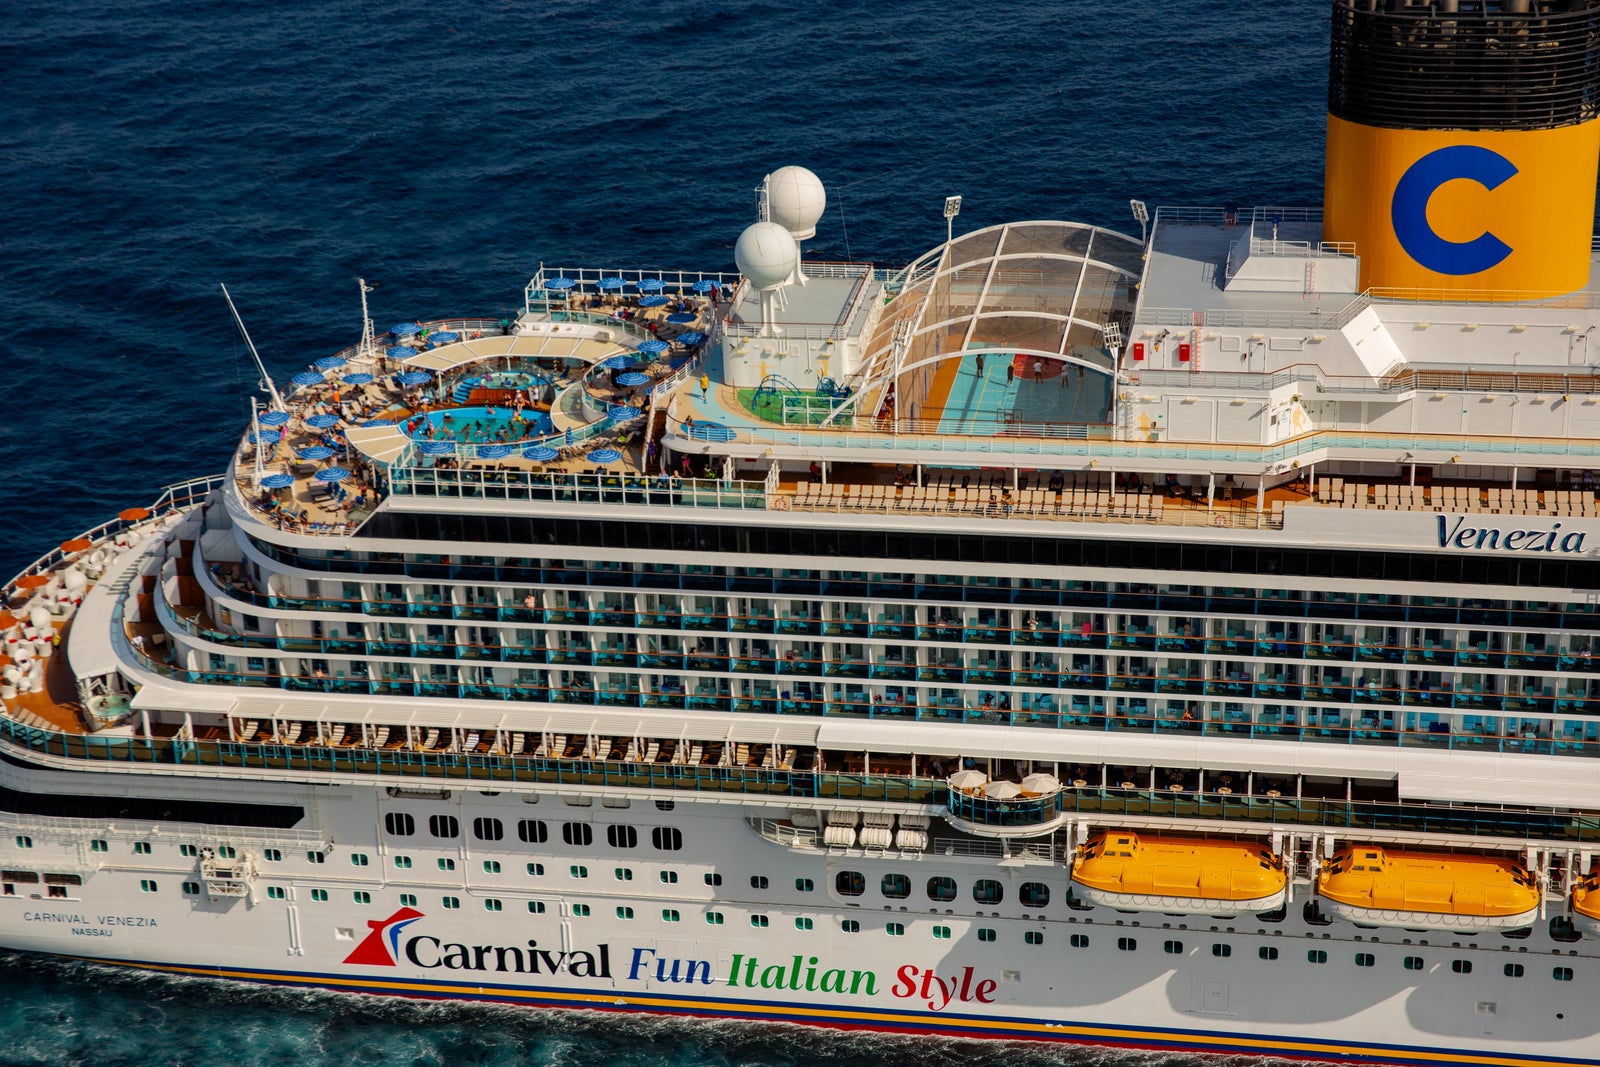 cruise ship to bahamas from florida